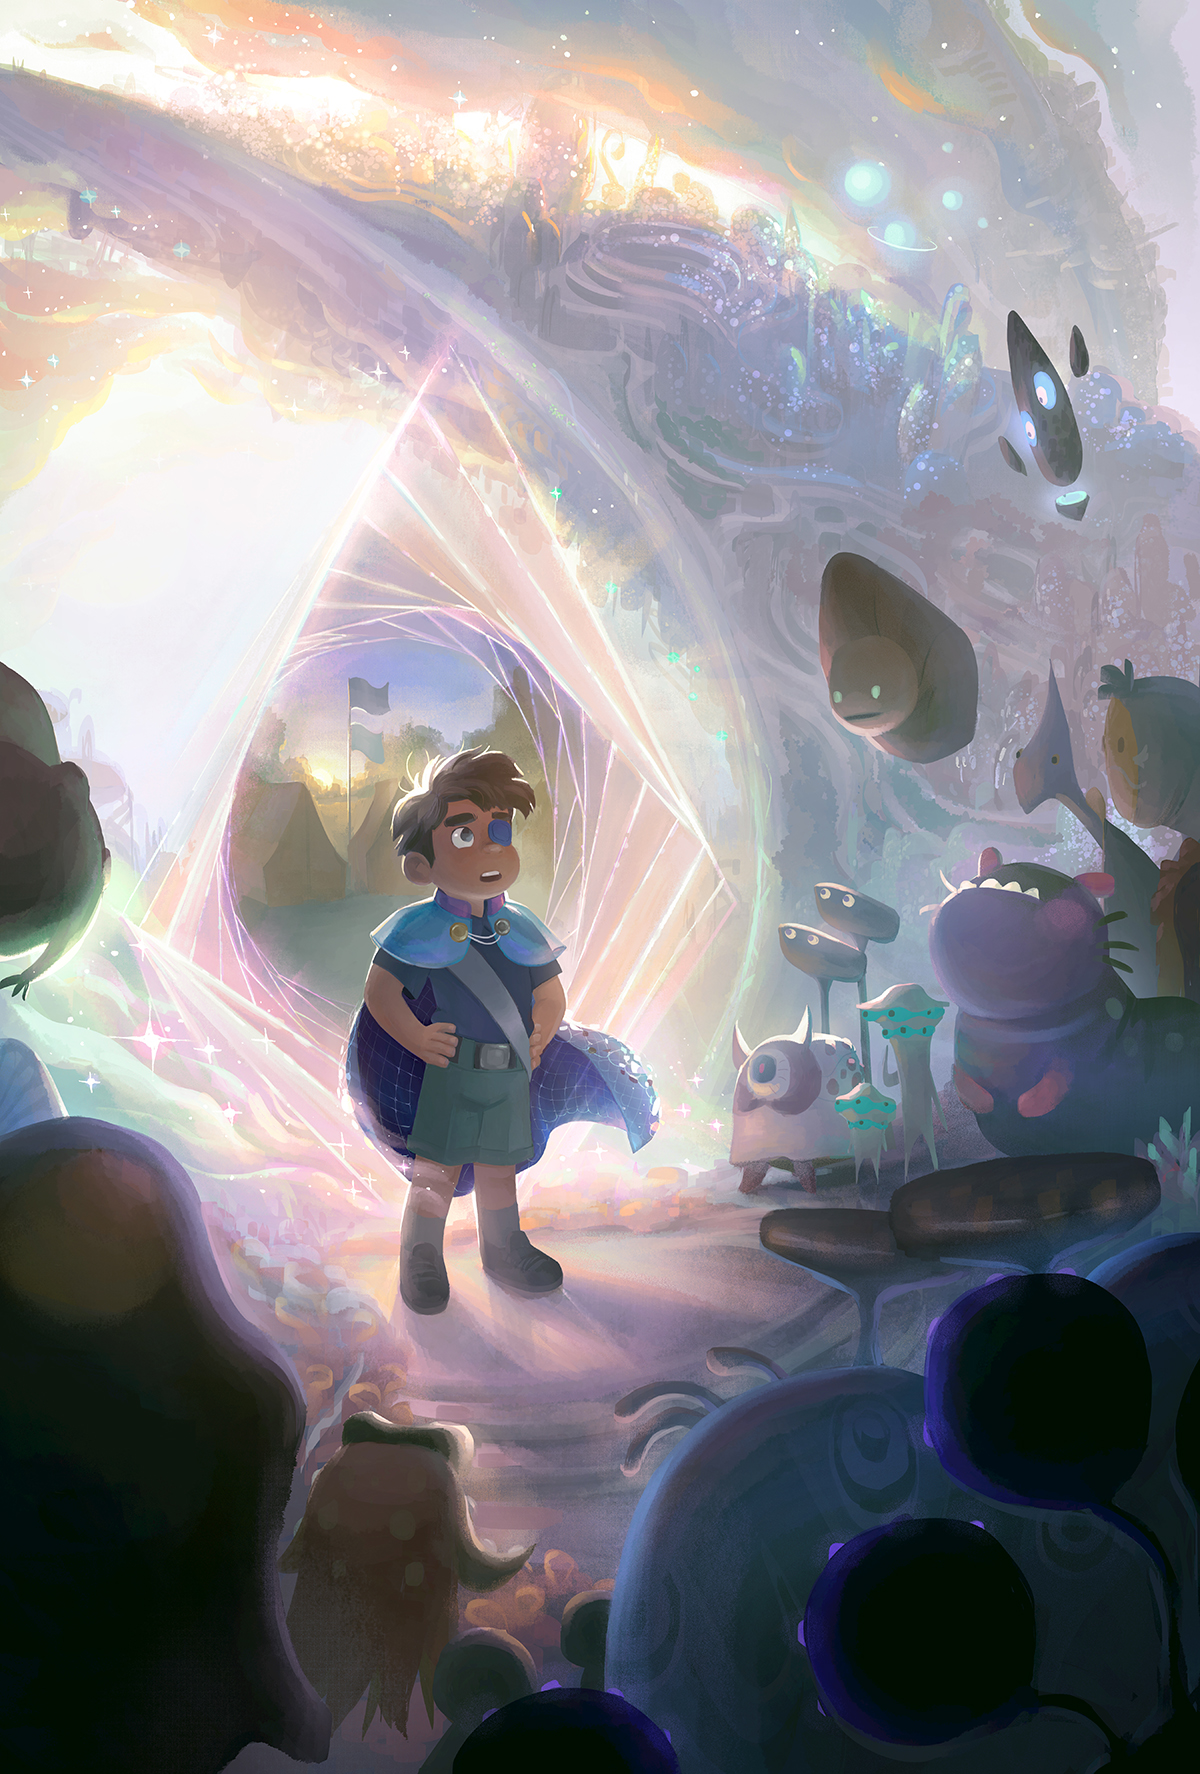 An image from Elio, with Elio (voiced by Yonas Kibreab) entering through a portal